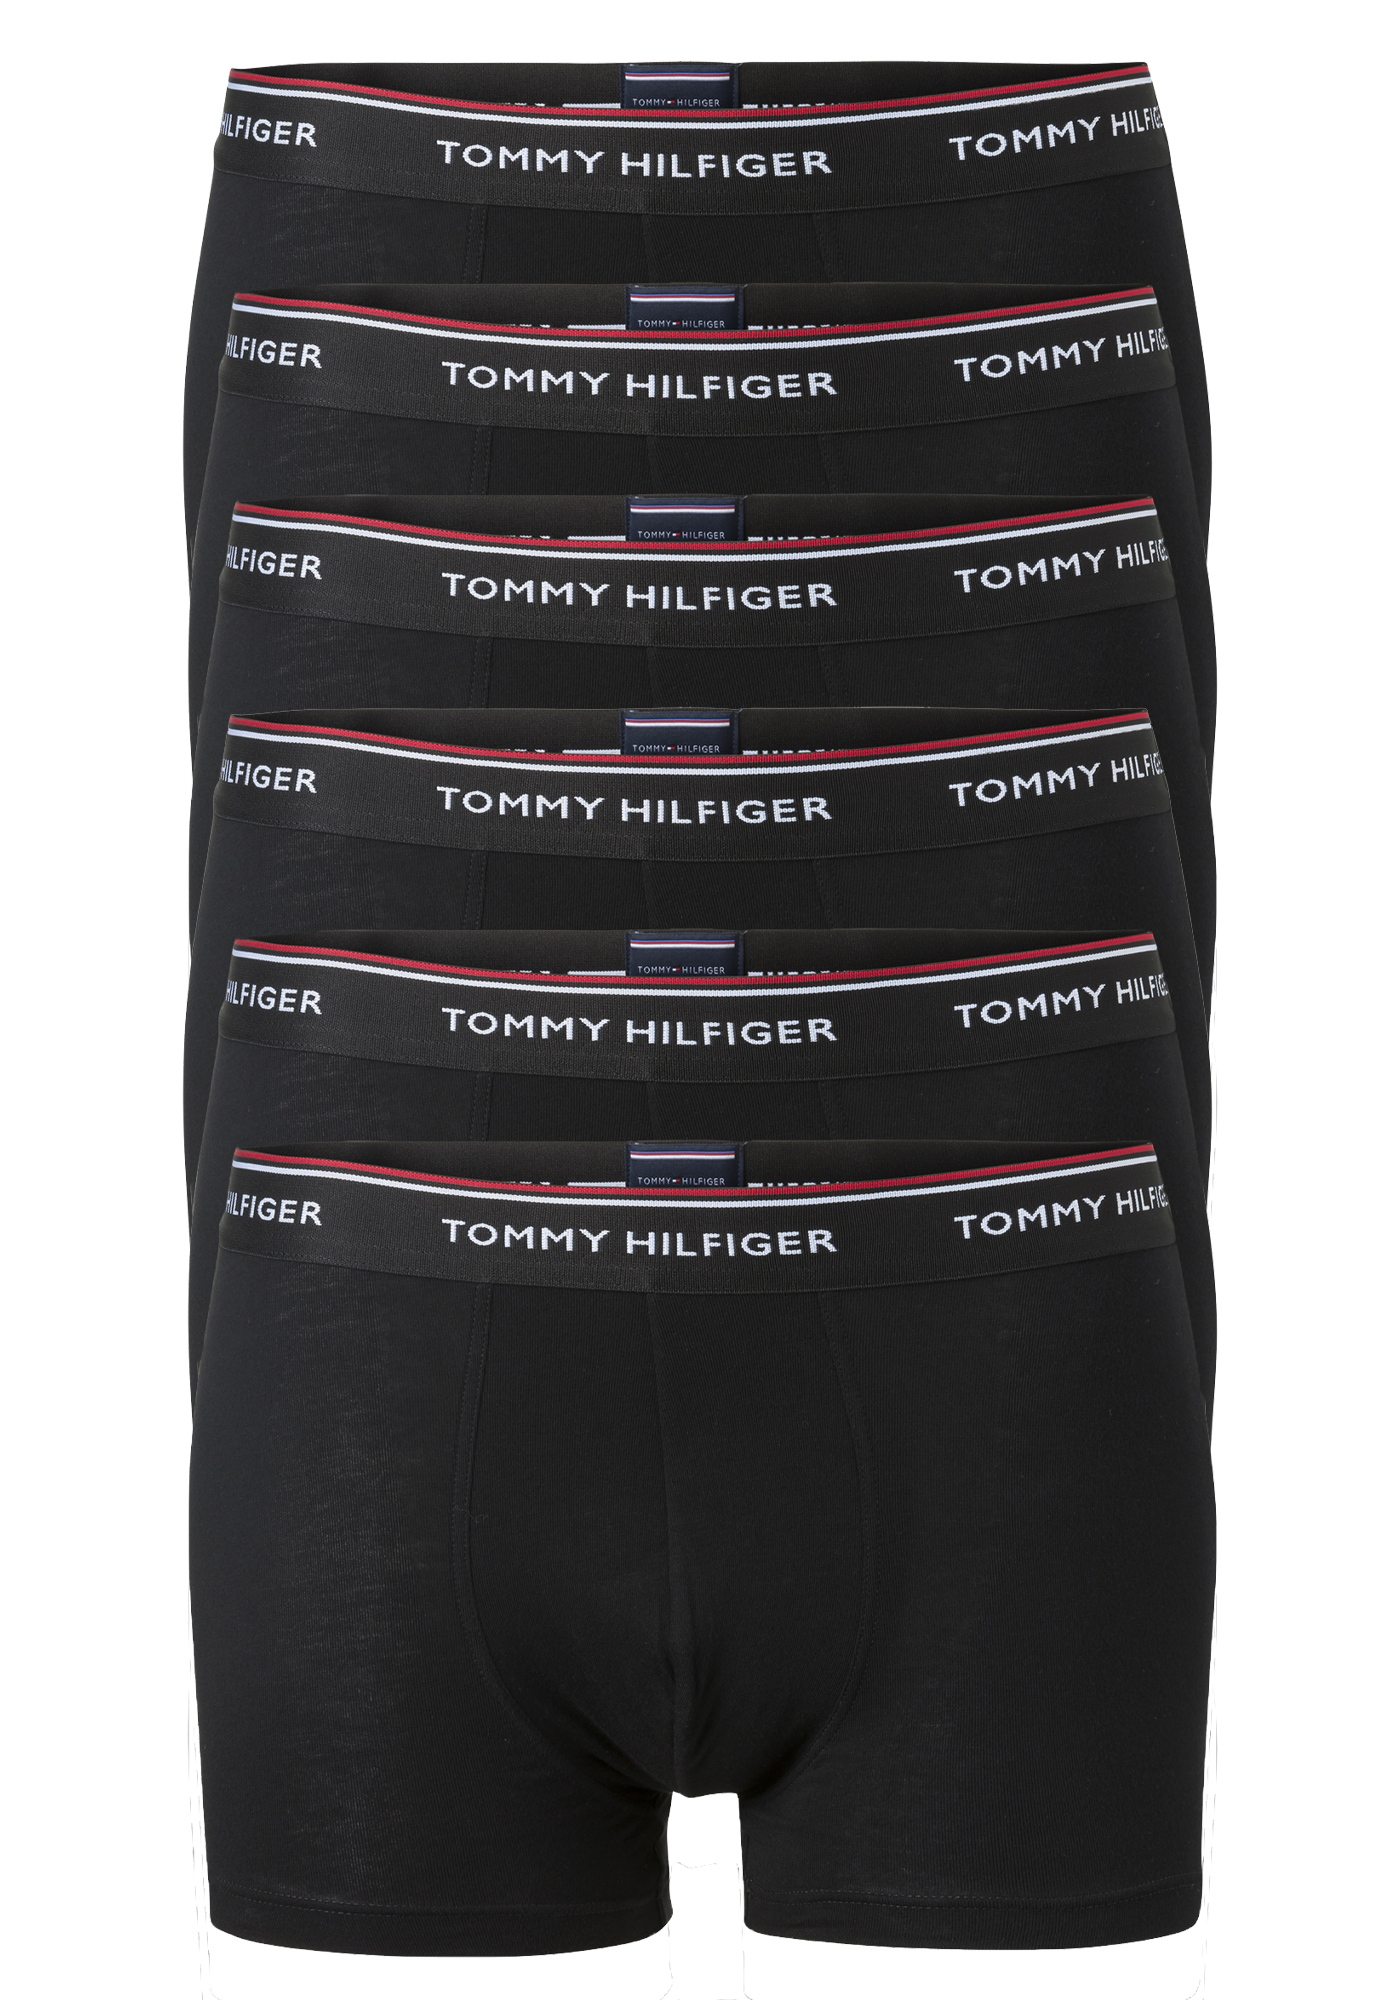 Tommy Hilfiger trunks (2x 3-pack), heren boxers normale lengte, zwart